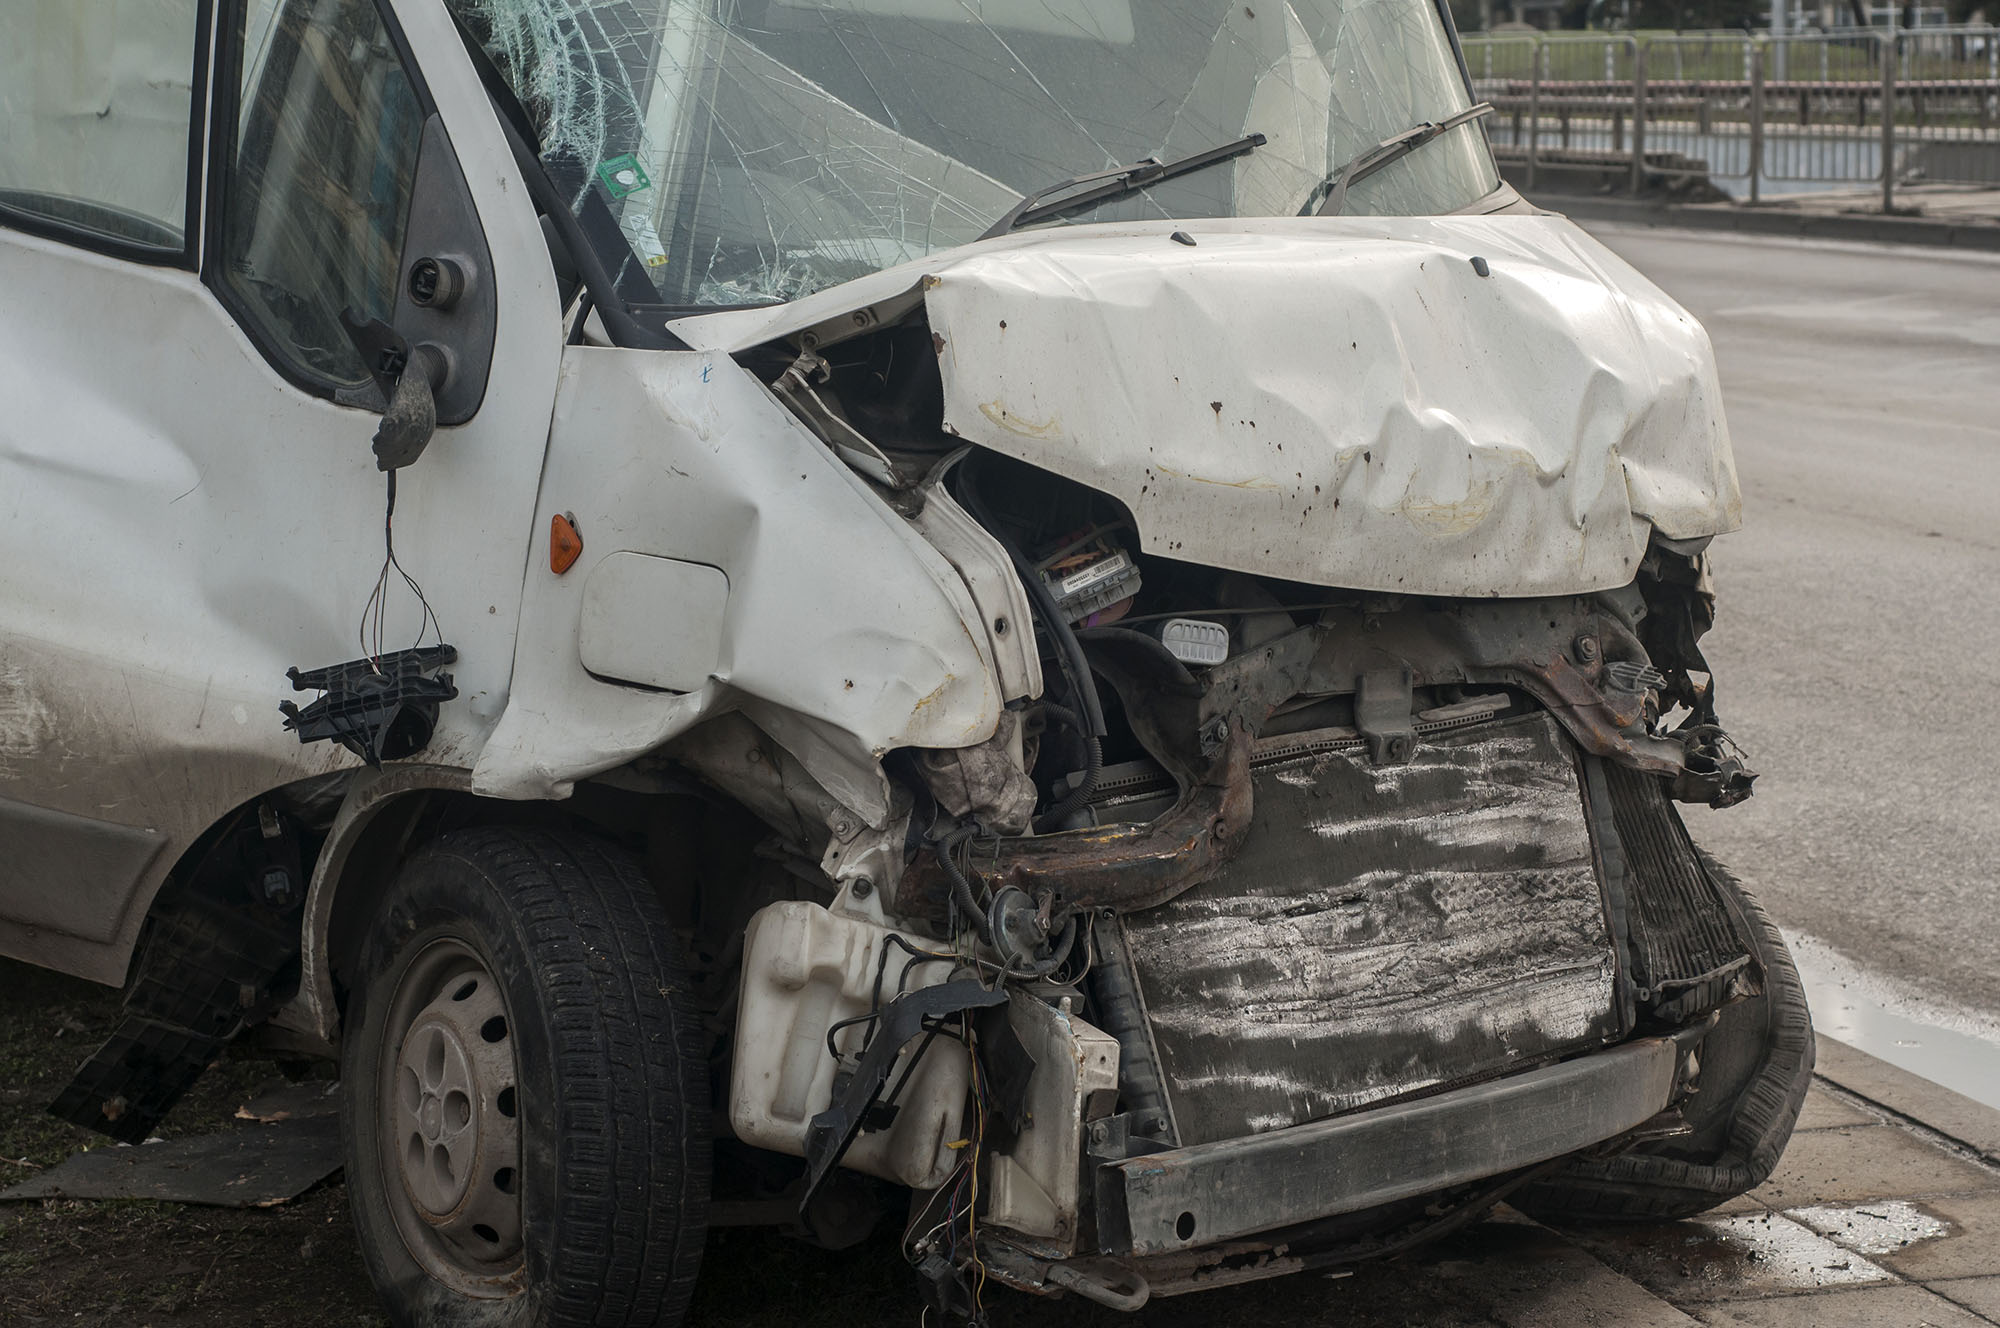 van accident crash injury compensation solicitors Bristol